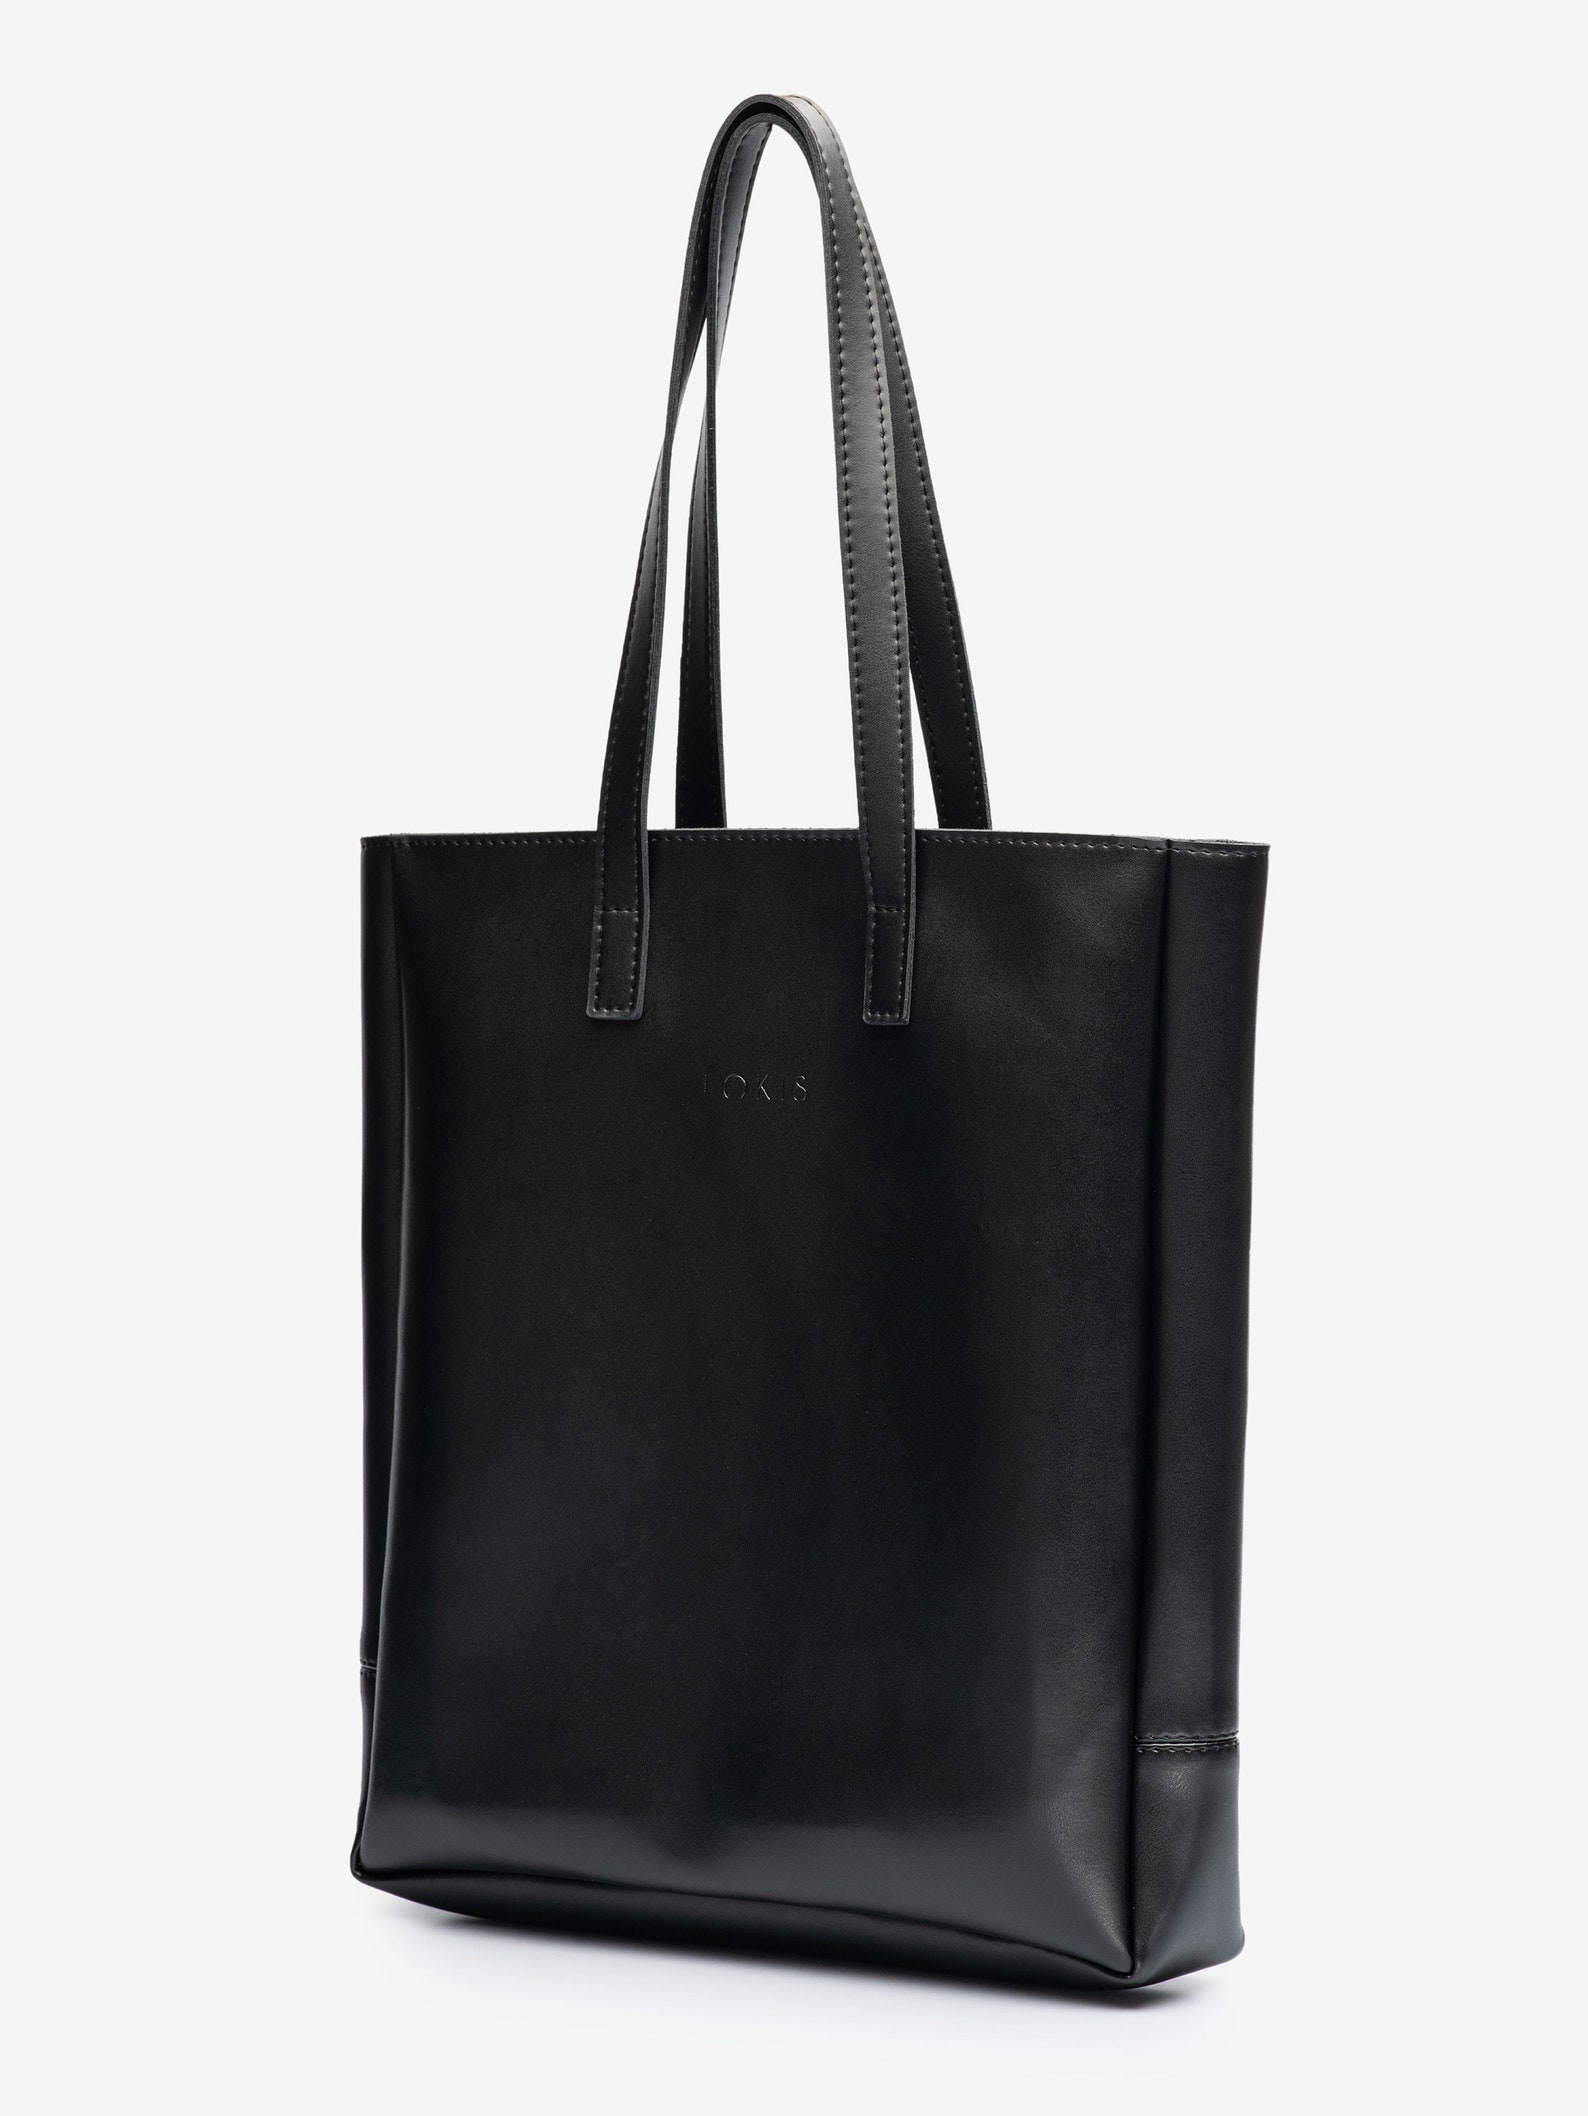 Black shopper bag / tote bag faux leather / gift / unisex / | Etsy